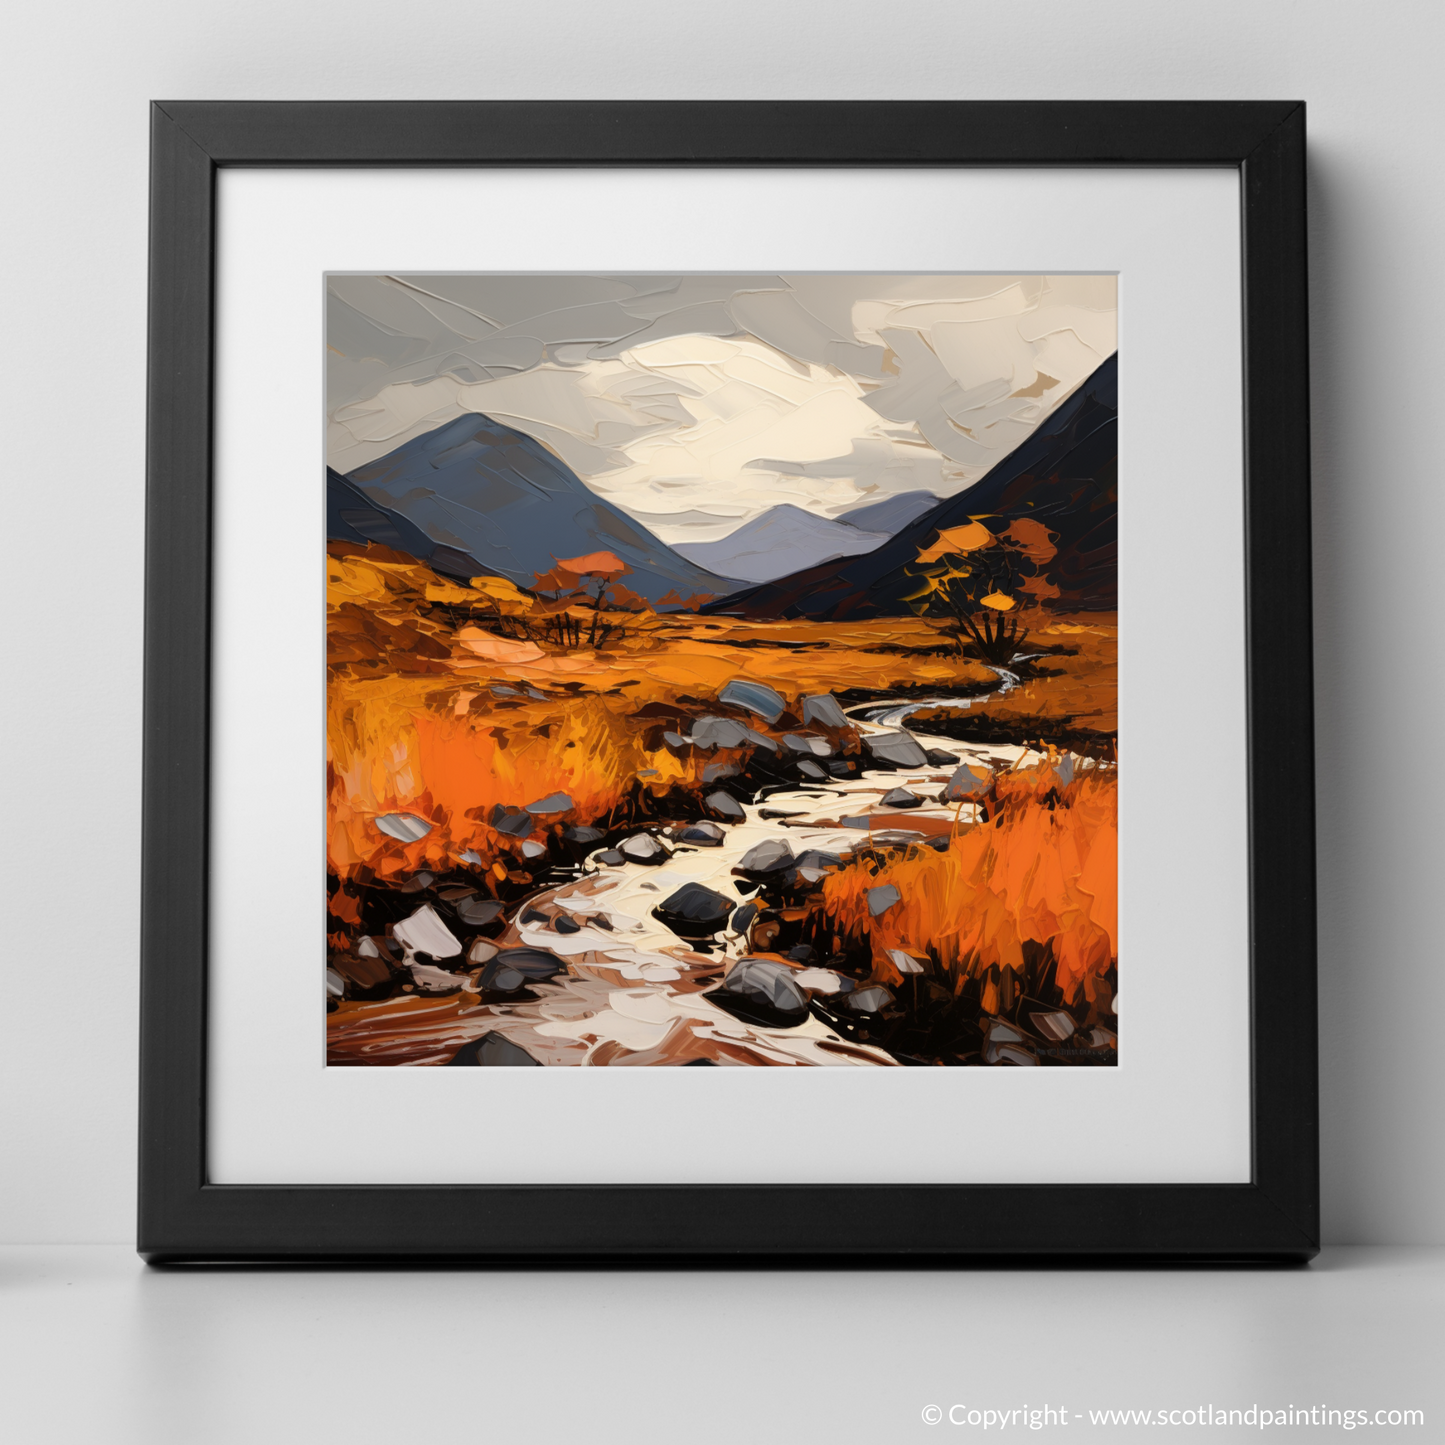 Art Print of Autumn hues in Glencoe with a black frame